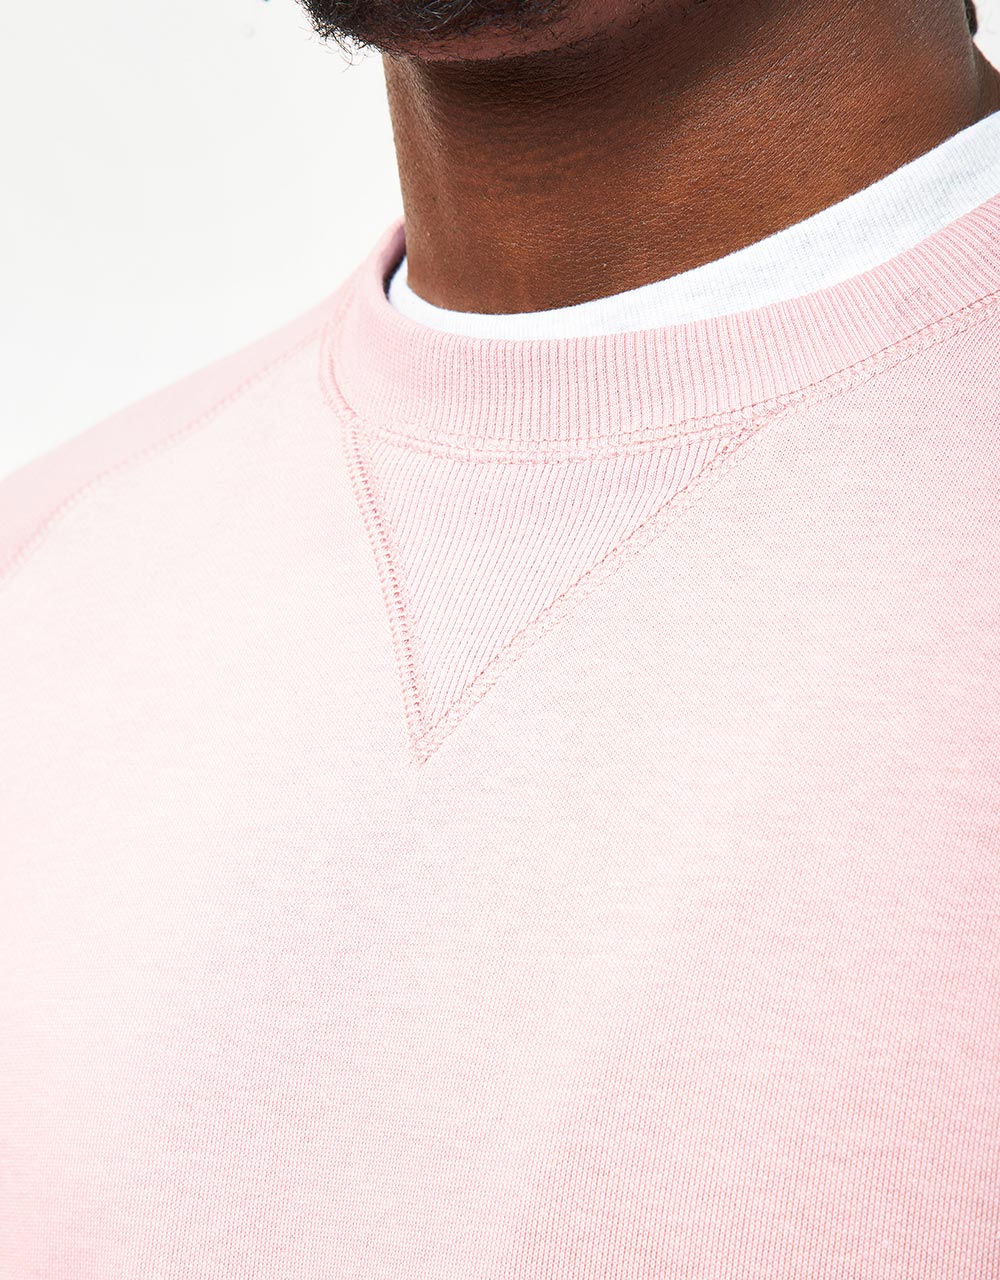 Carhartt WIP Chase Sweatshirt - Glassy Pink/Gold